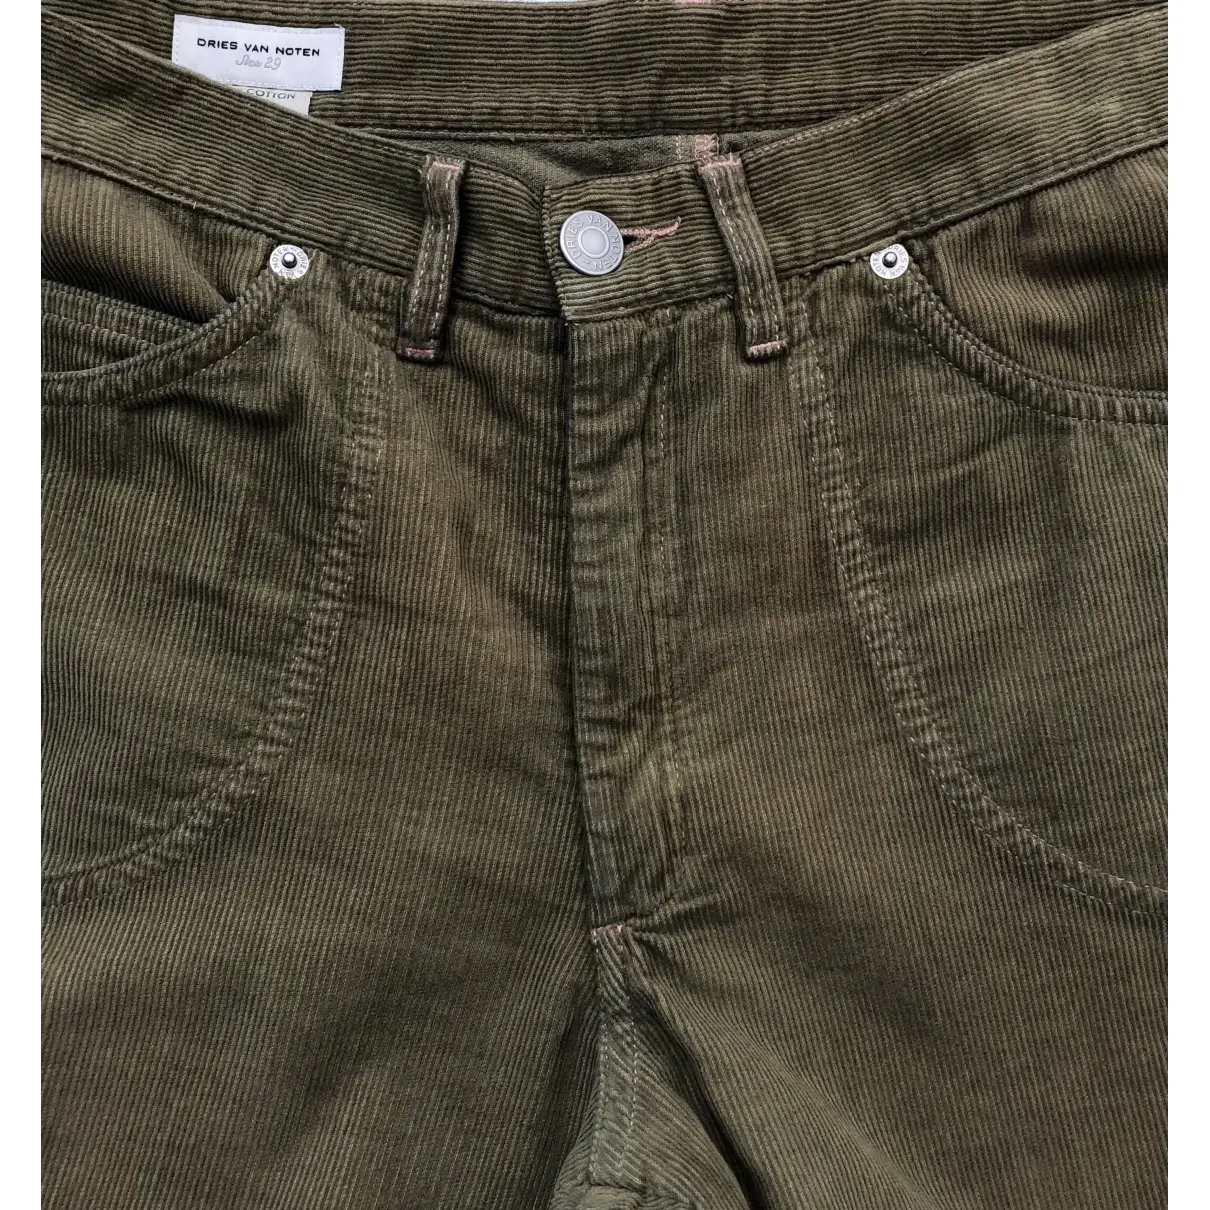 Khaki Cotton Jeans Dries Van Noten - Vintage